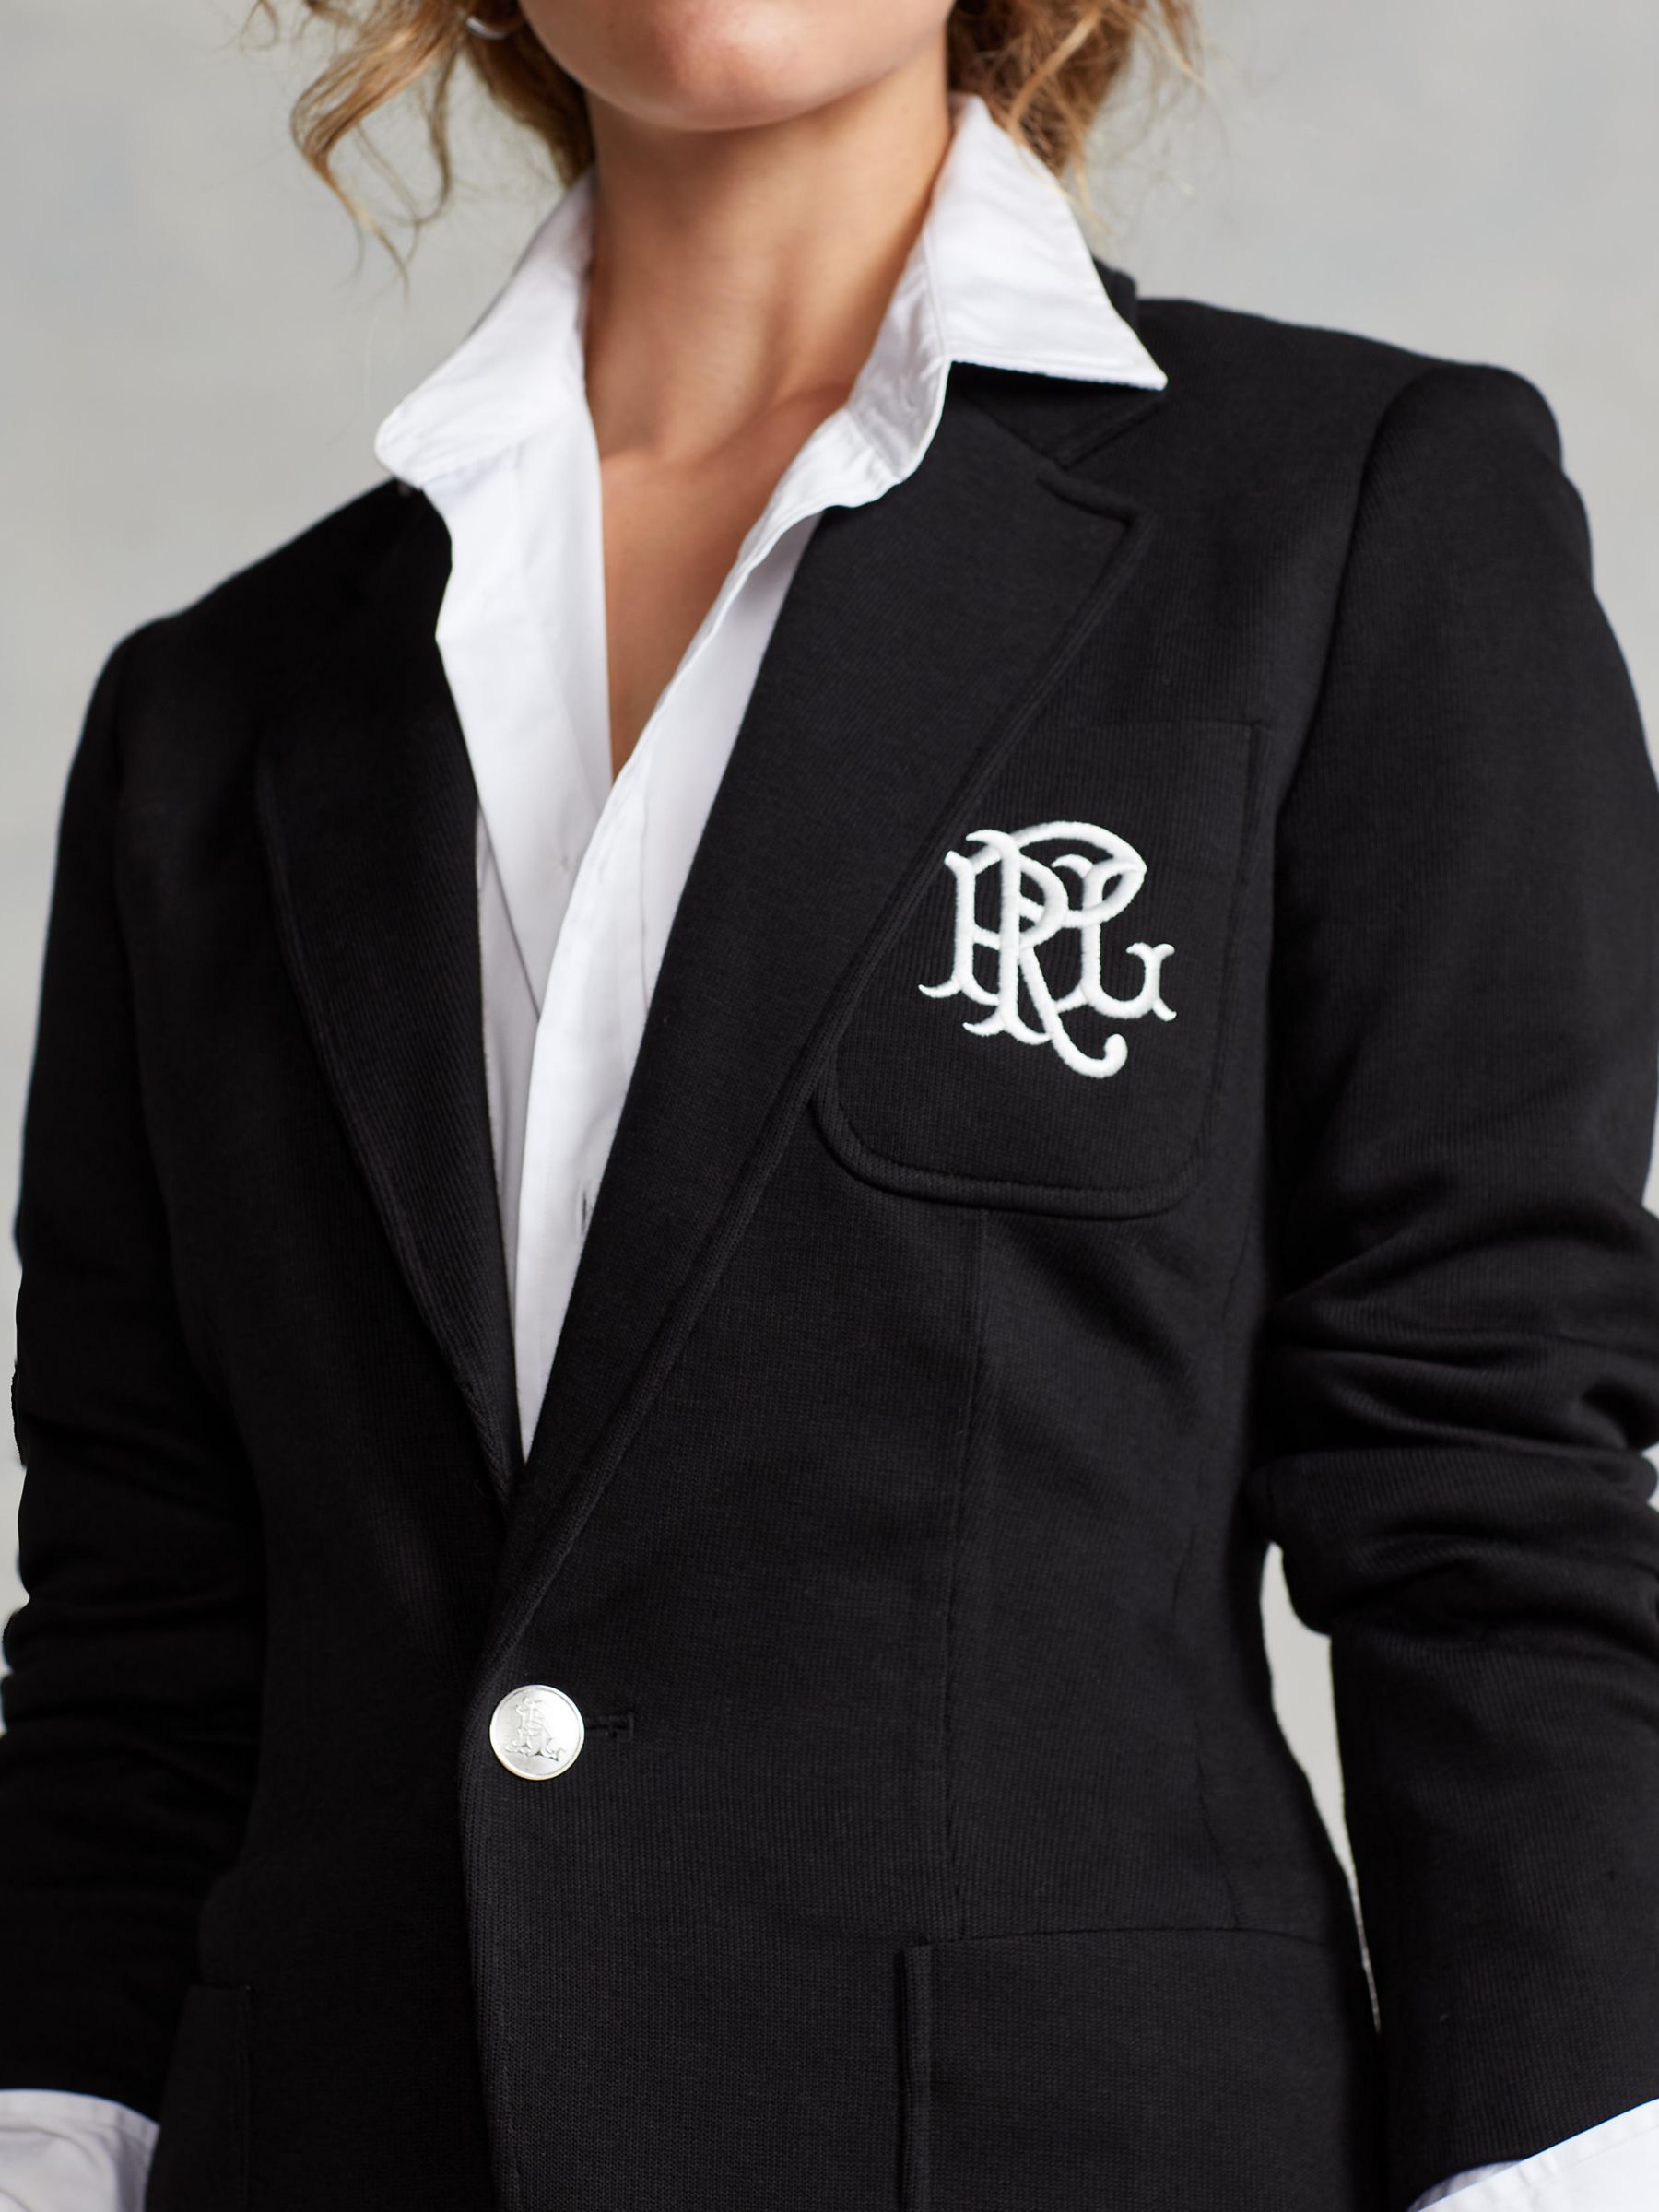 Polo Ralph Lauren Cotton Blend Blazer, Black at John Lewis & Partners